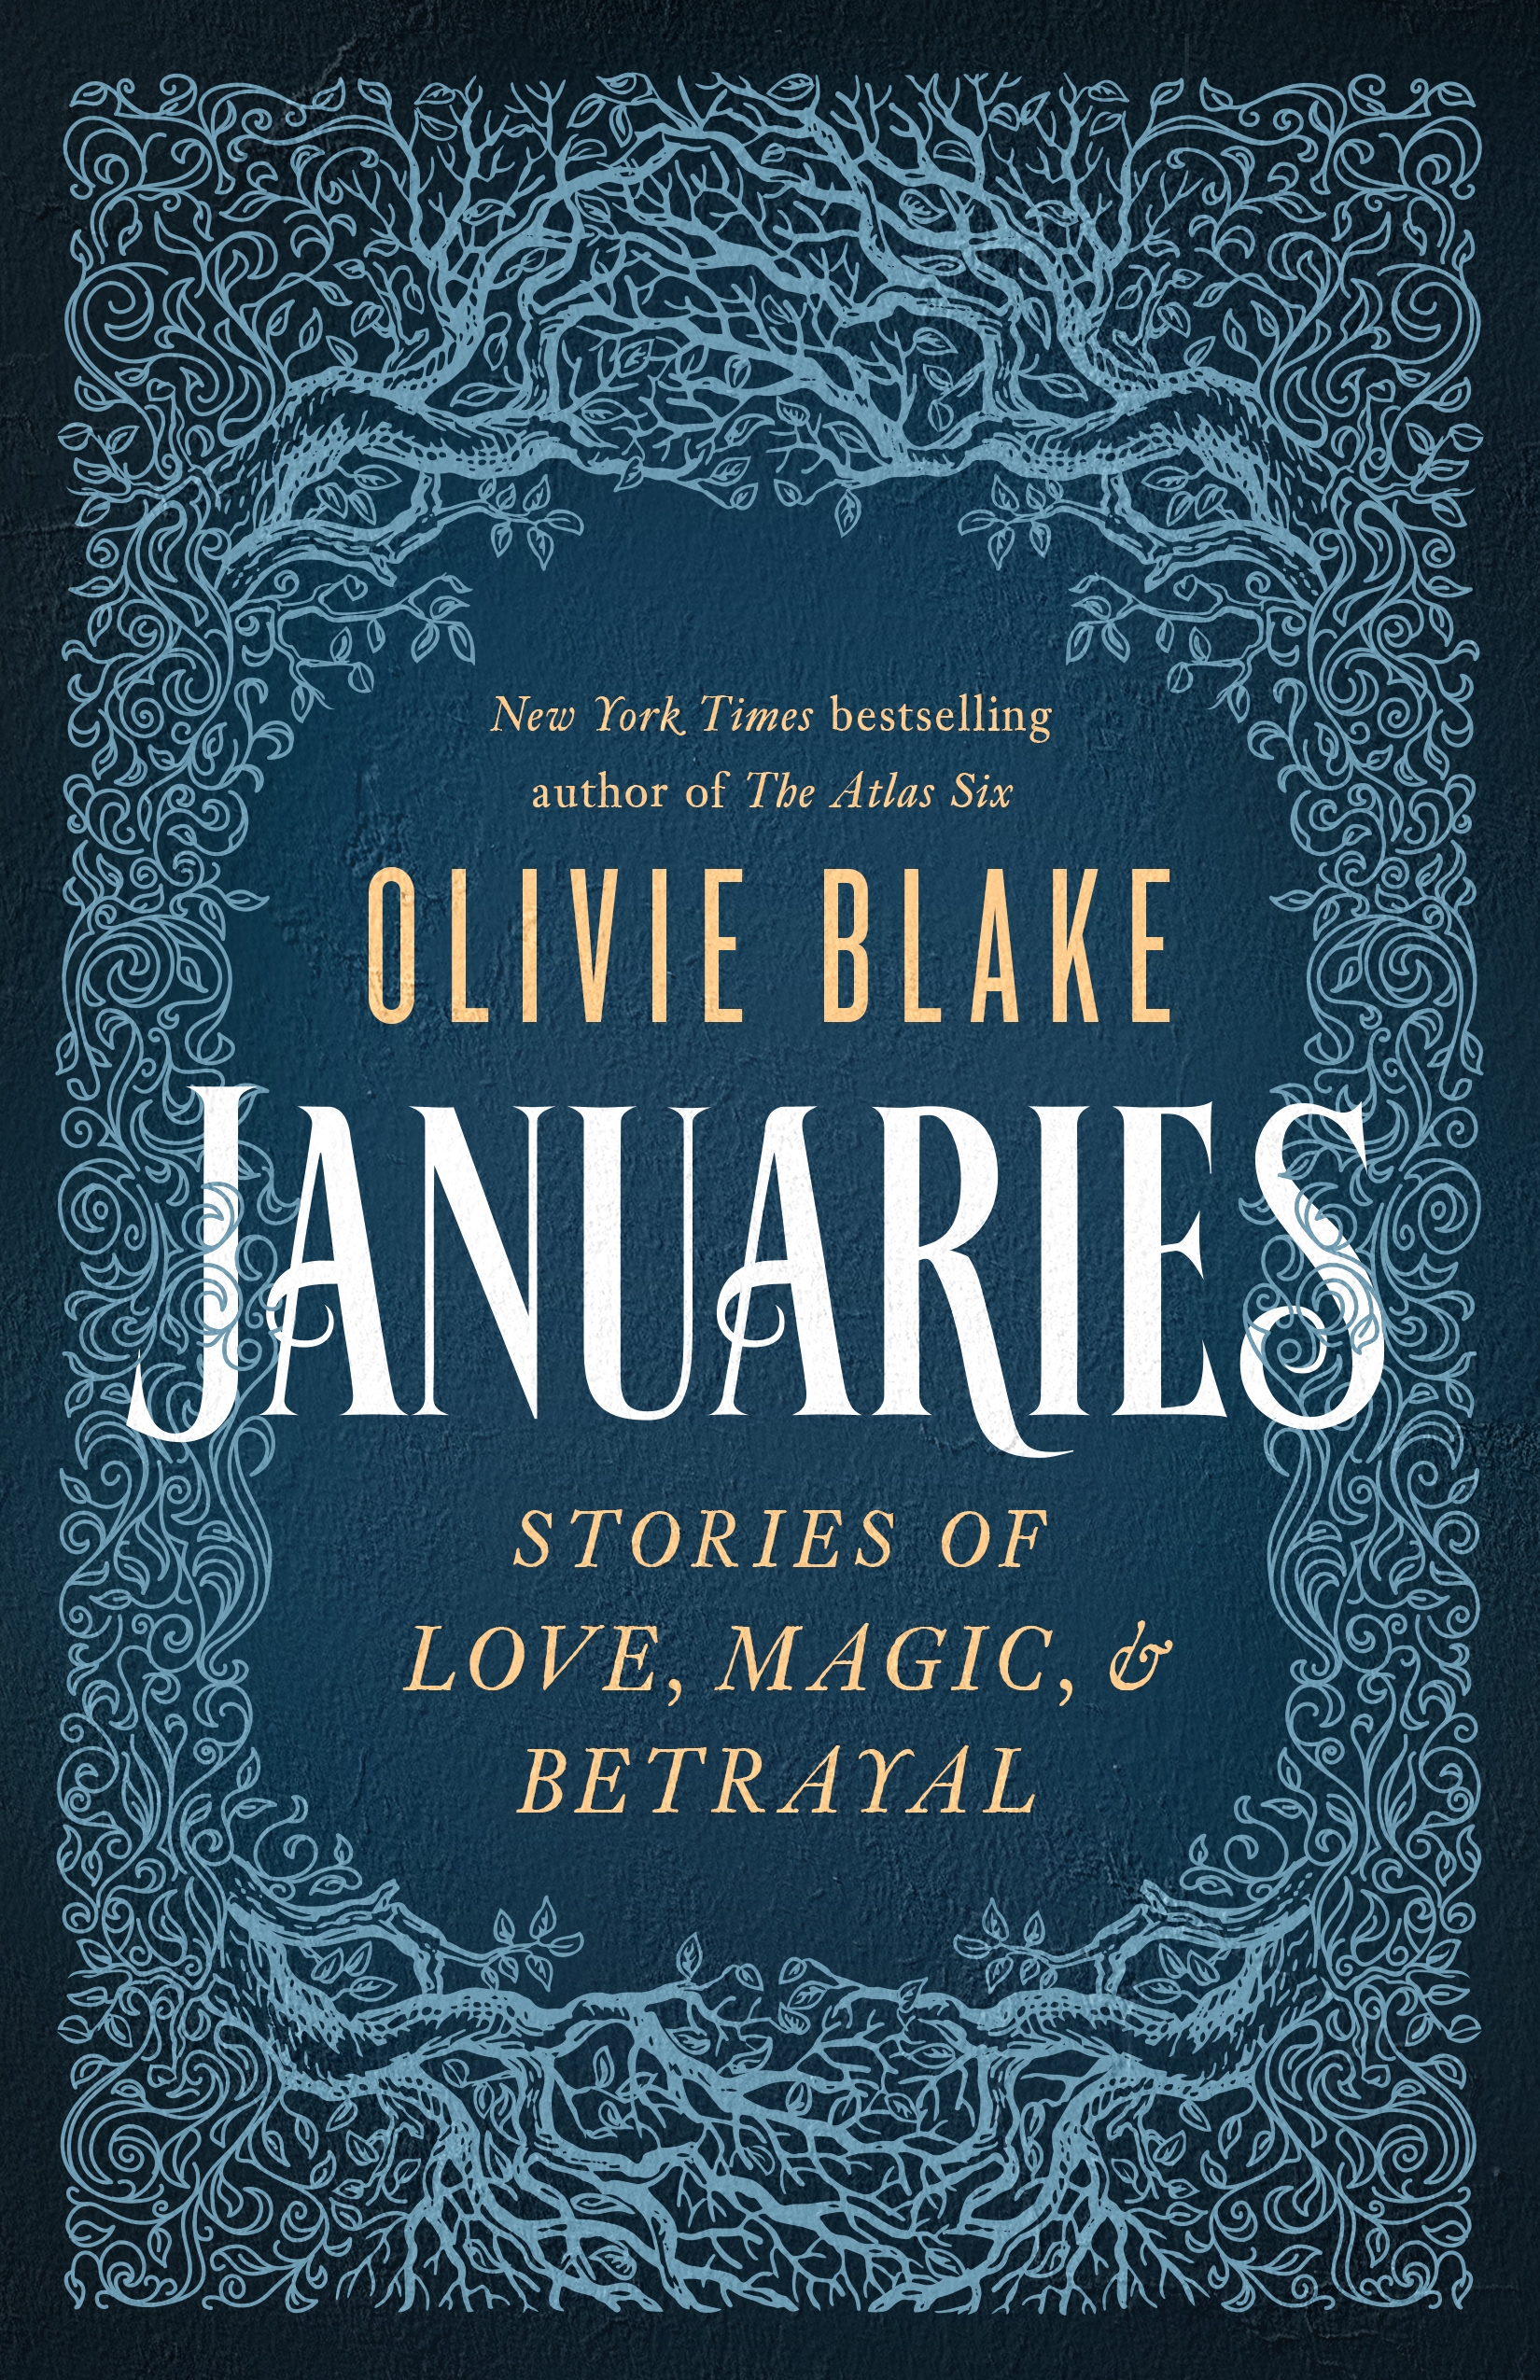 Januaries : Stories of Love, Magic, & Betrayal by Olivie Blake